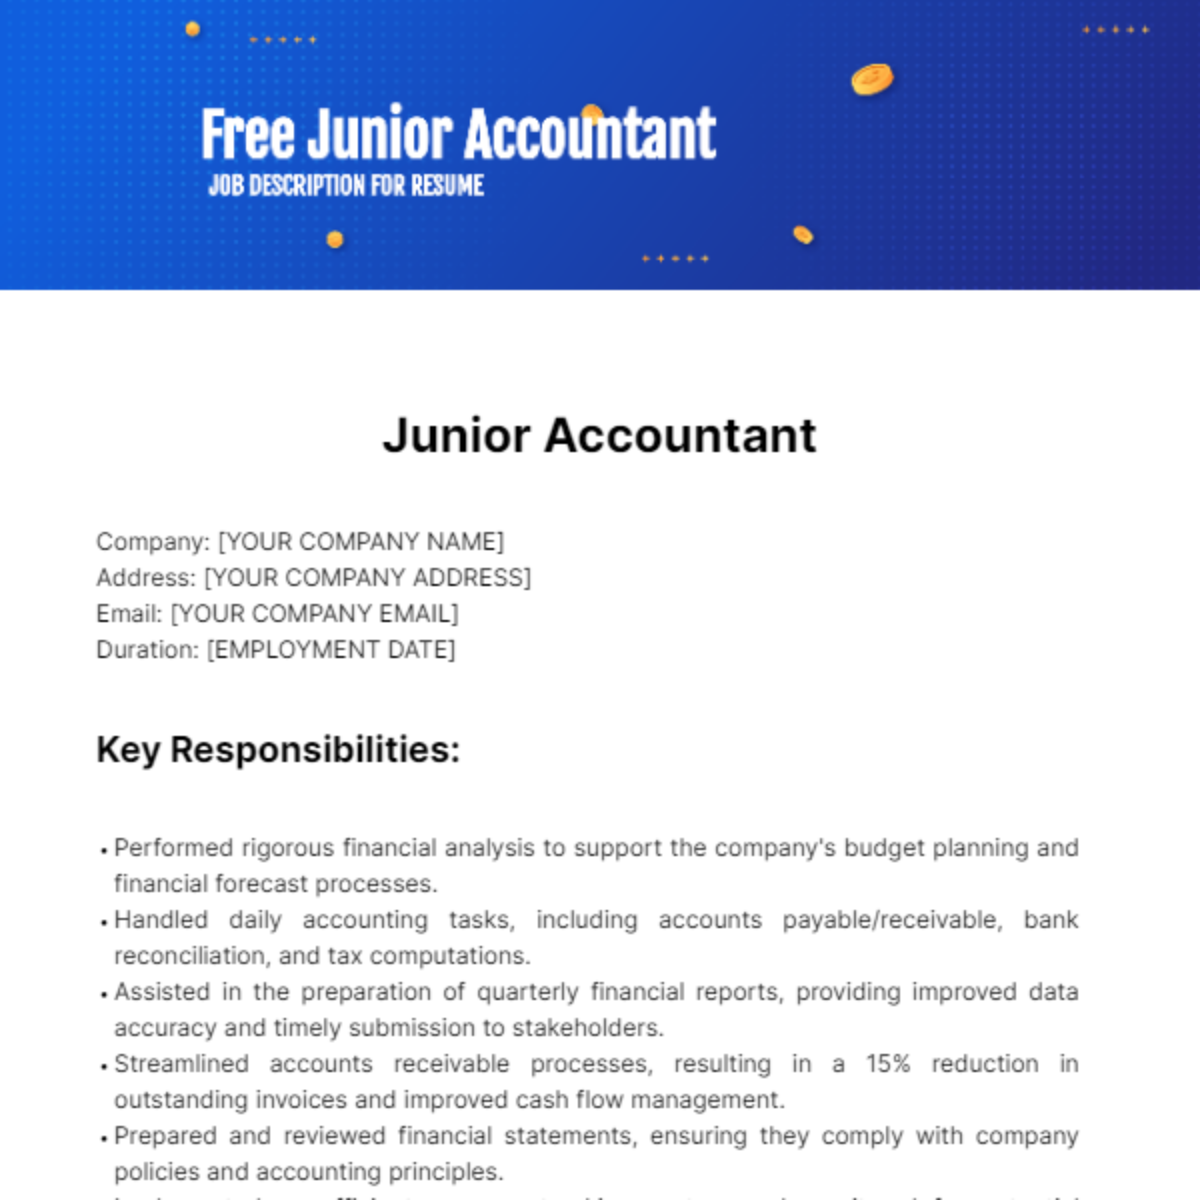 Free Junior Accountant Job Description for Resume Template